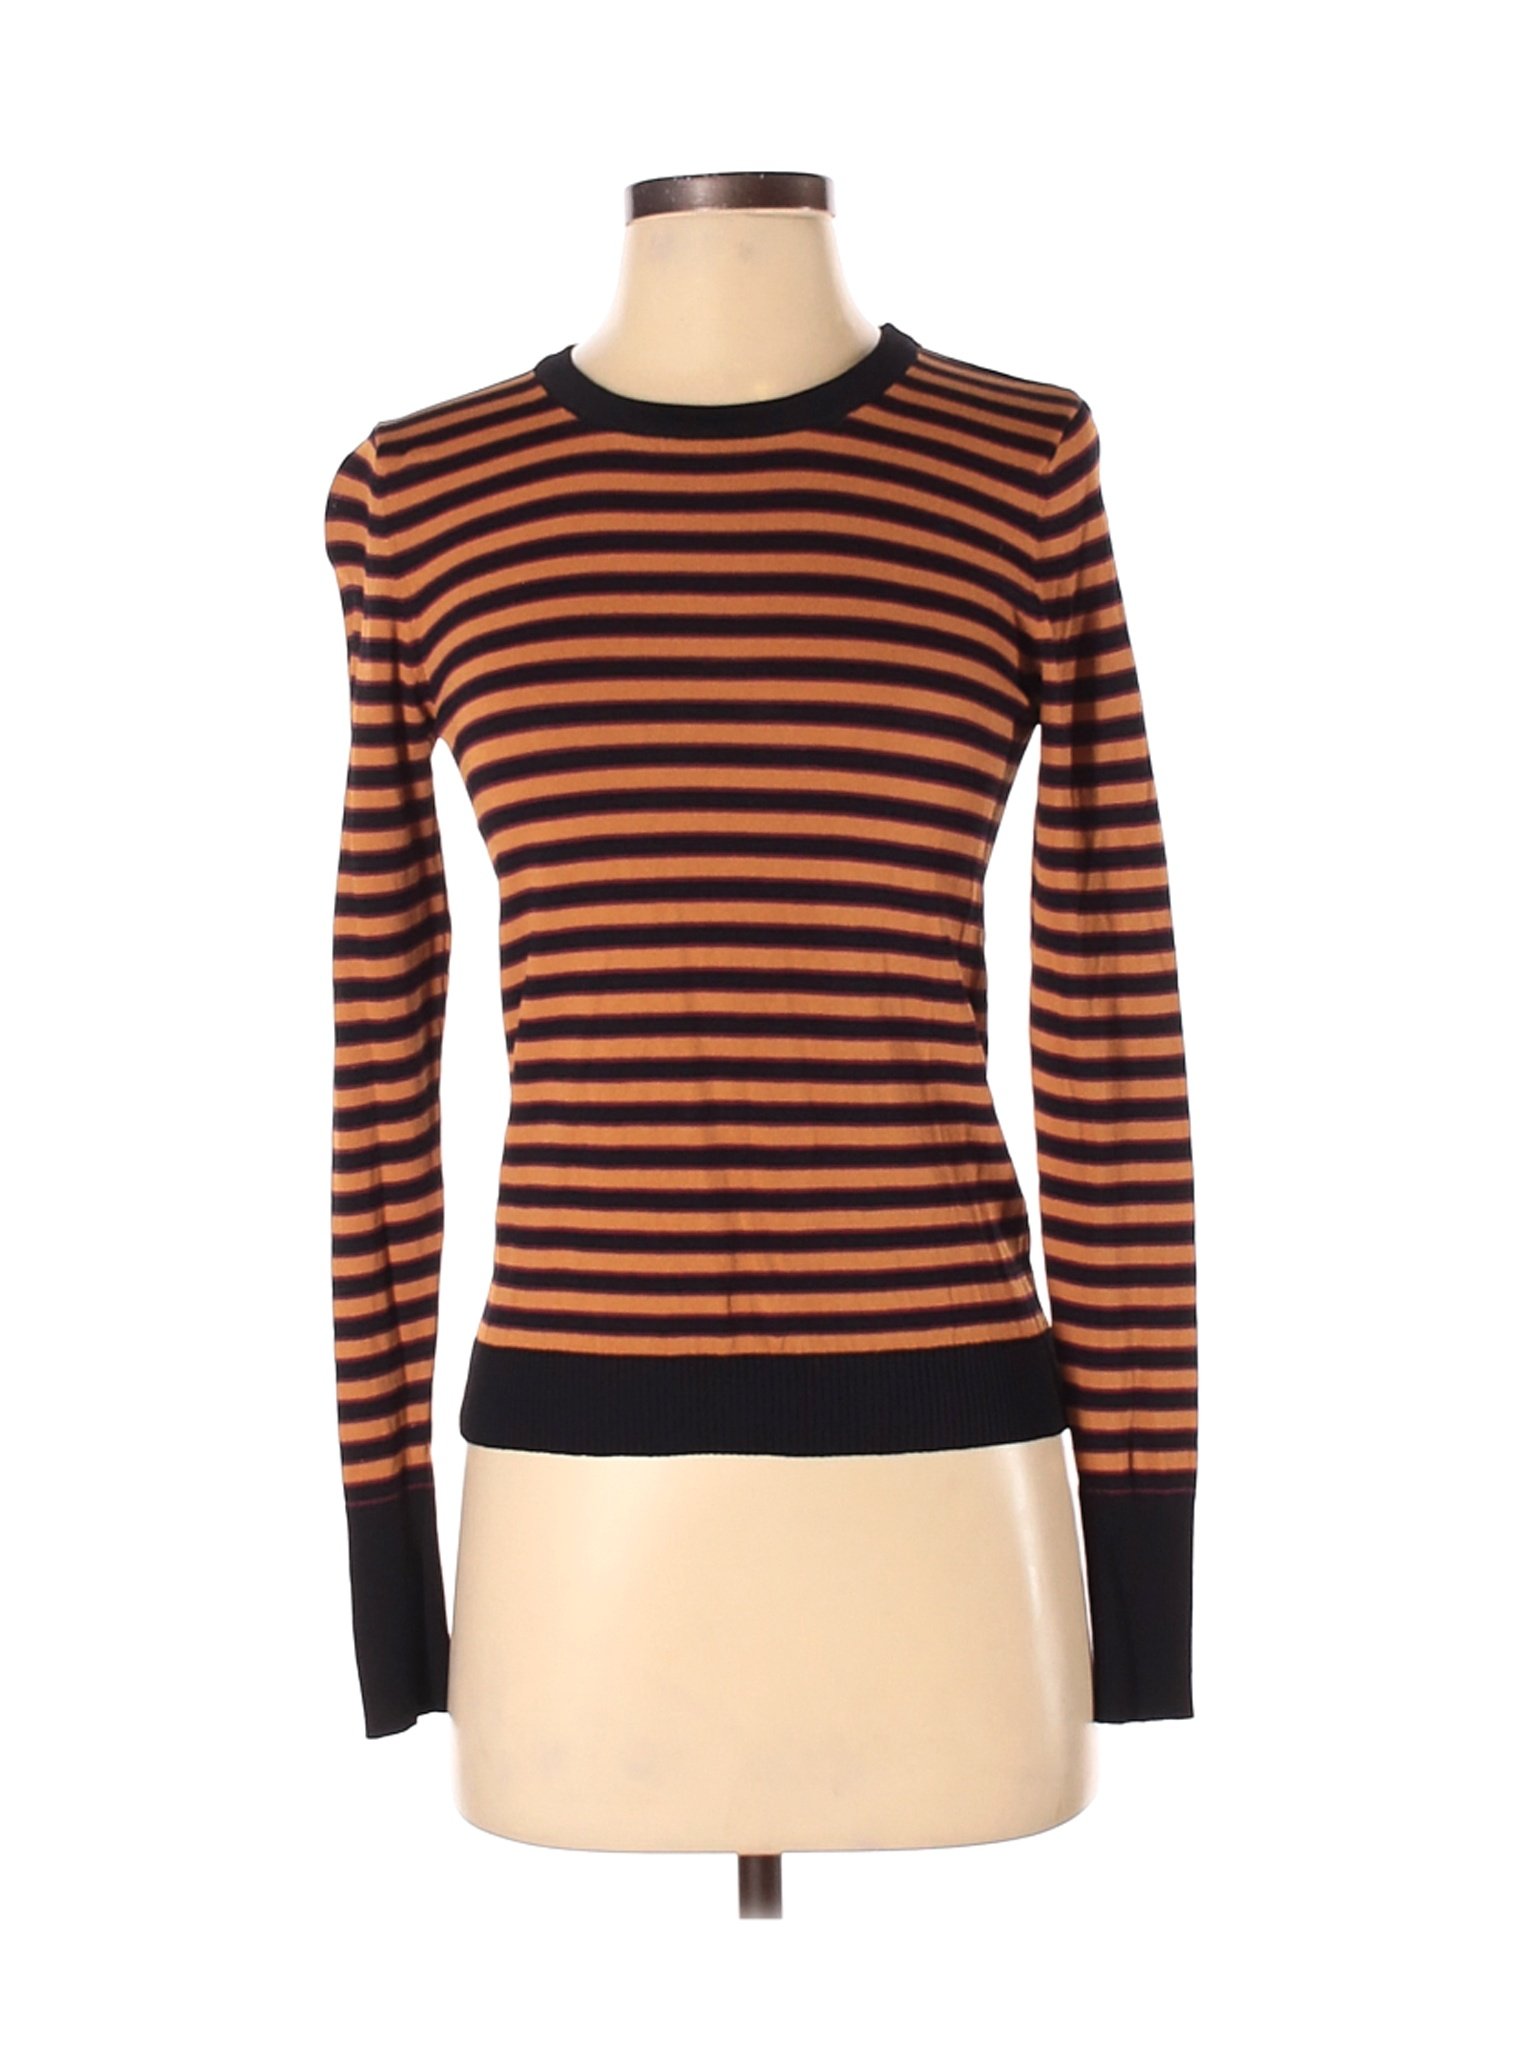 Zara Women Orange Long Sleeve Top S | eBay